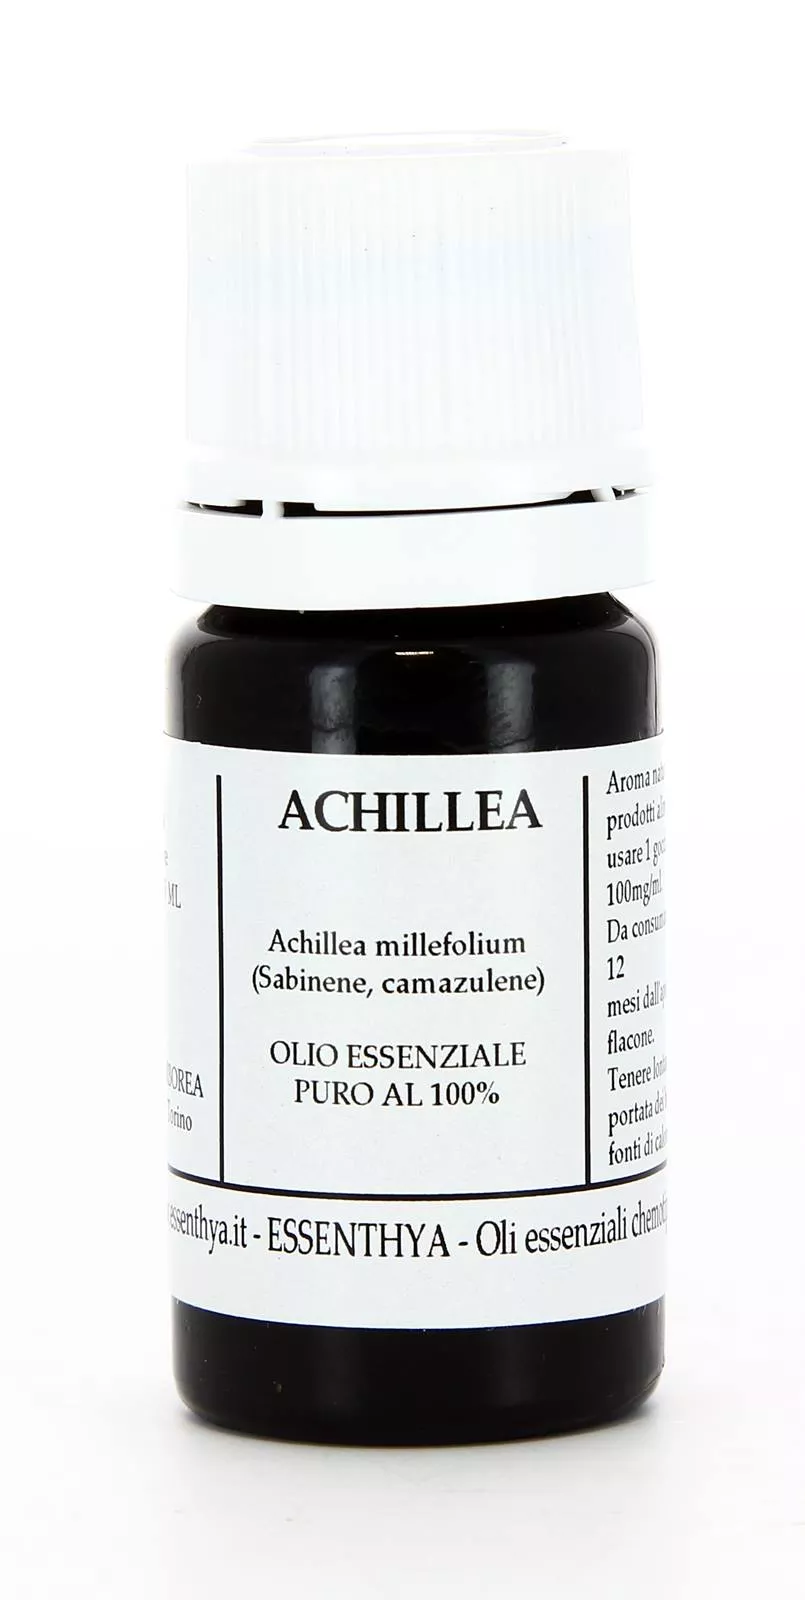 Achillea - Olio Essenziale Puro - Essenthya - Oli Essenziali professionali